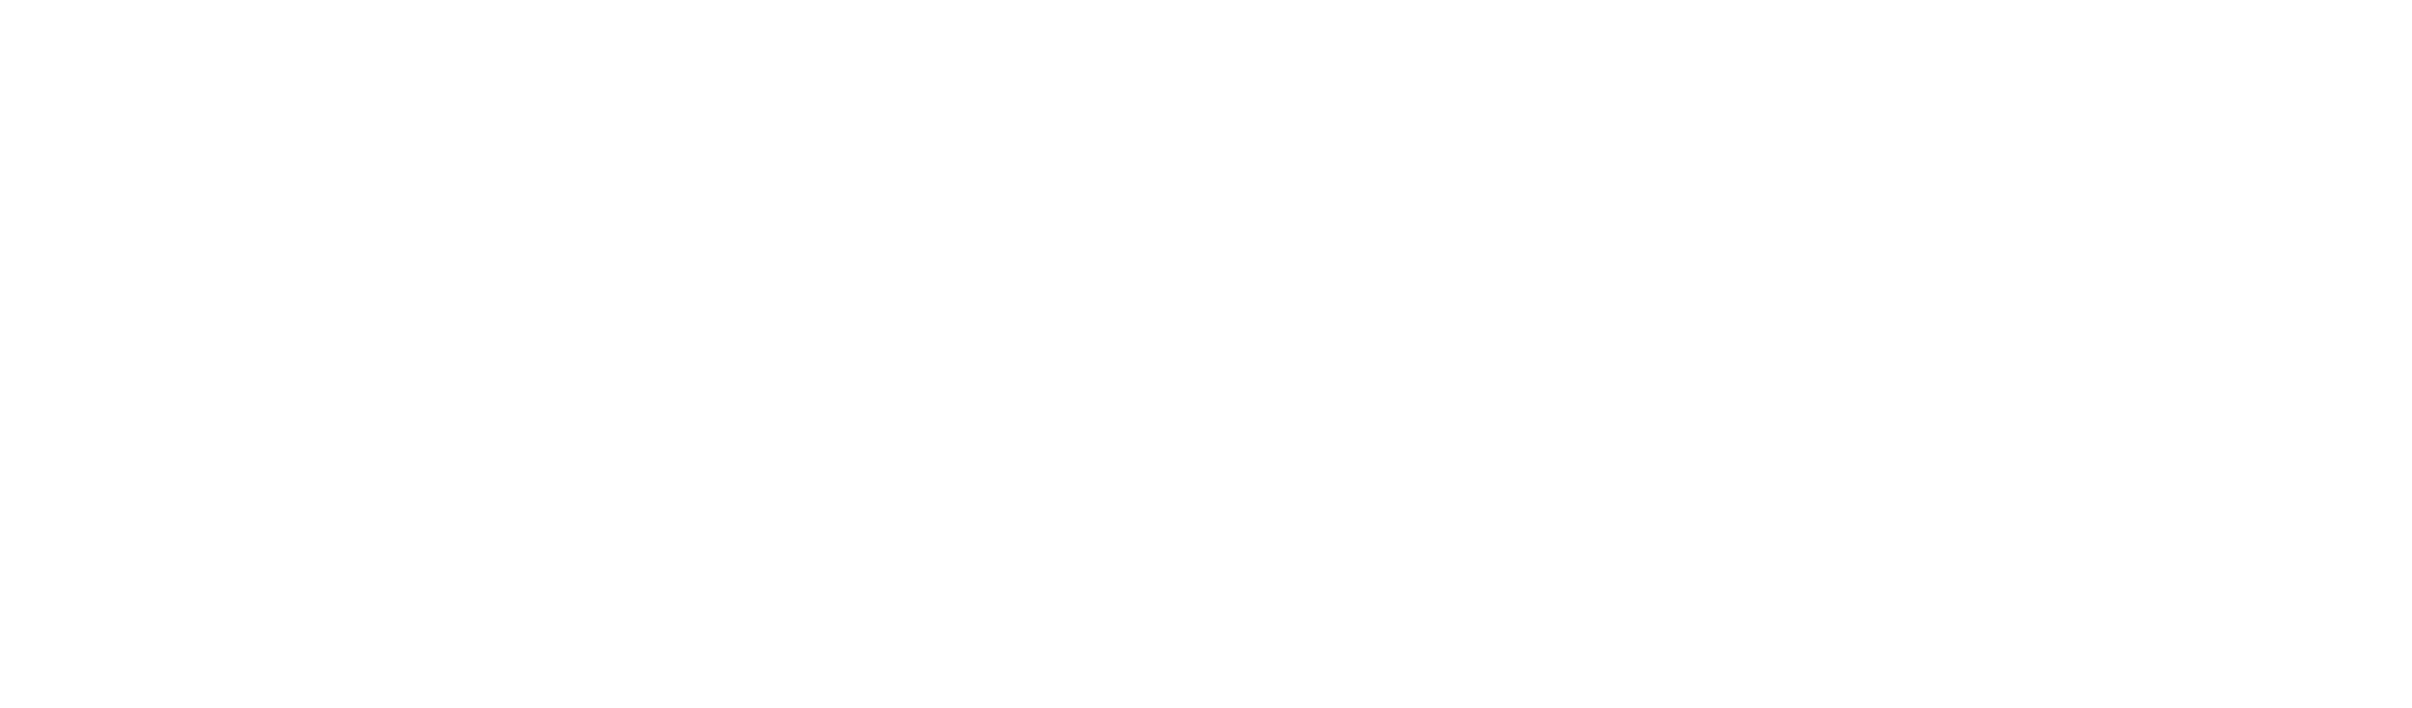 democratization logo espanol